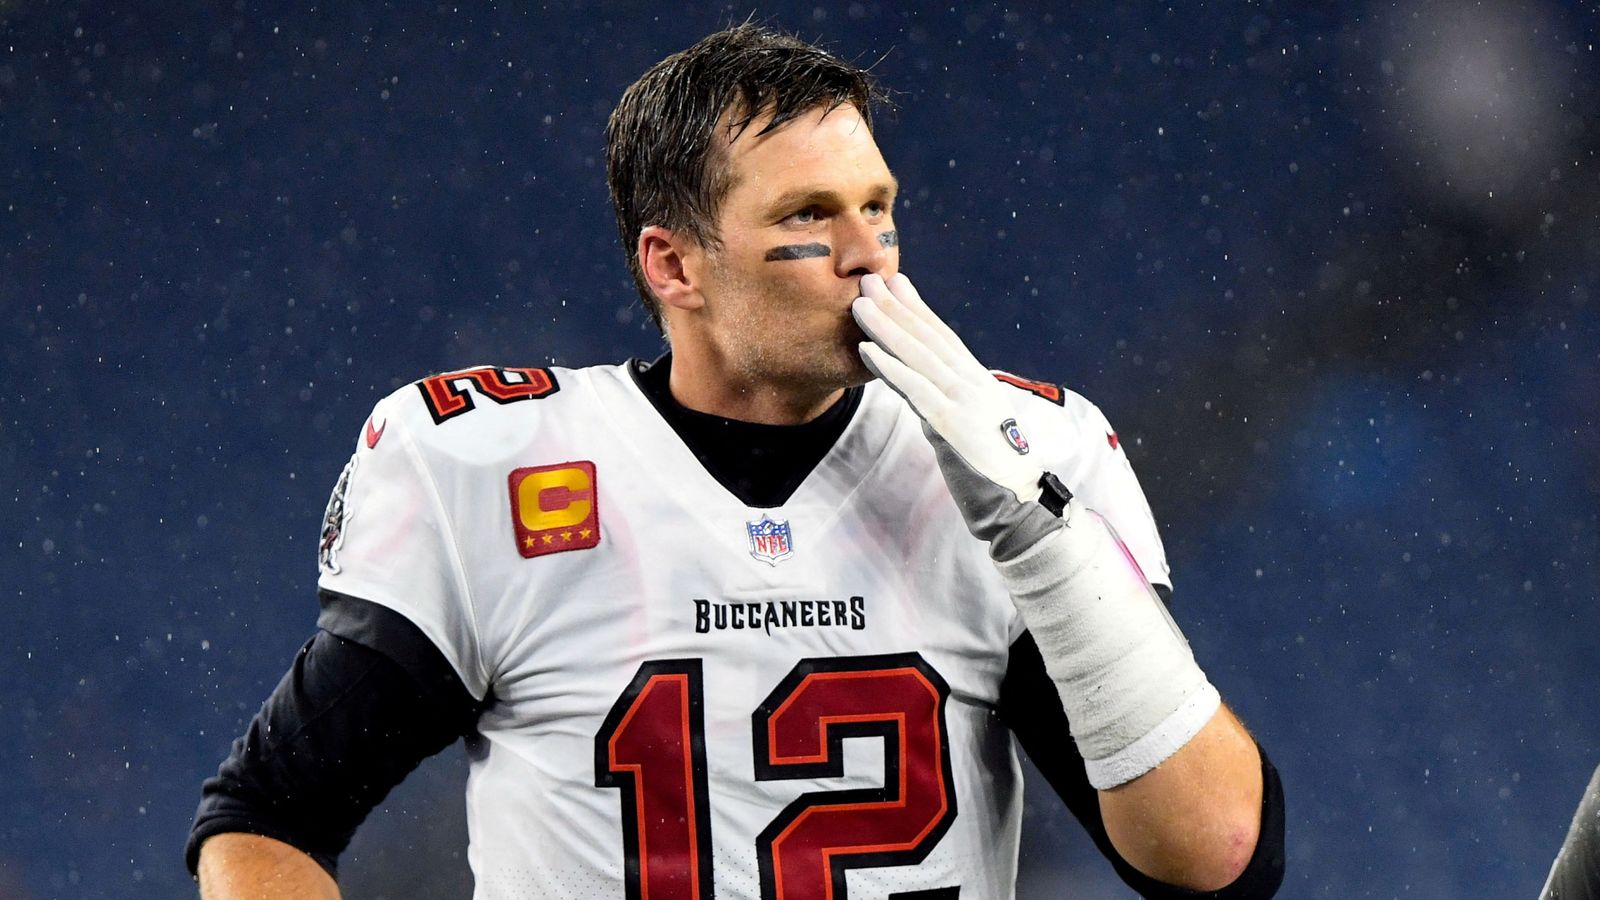 NFL legend Tom Brady backtracks on retirement and confirms return to